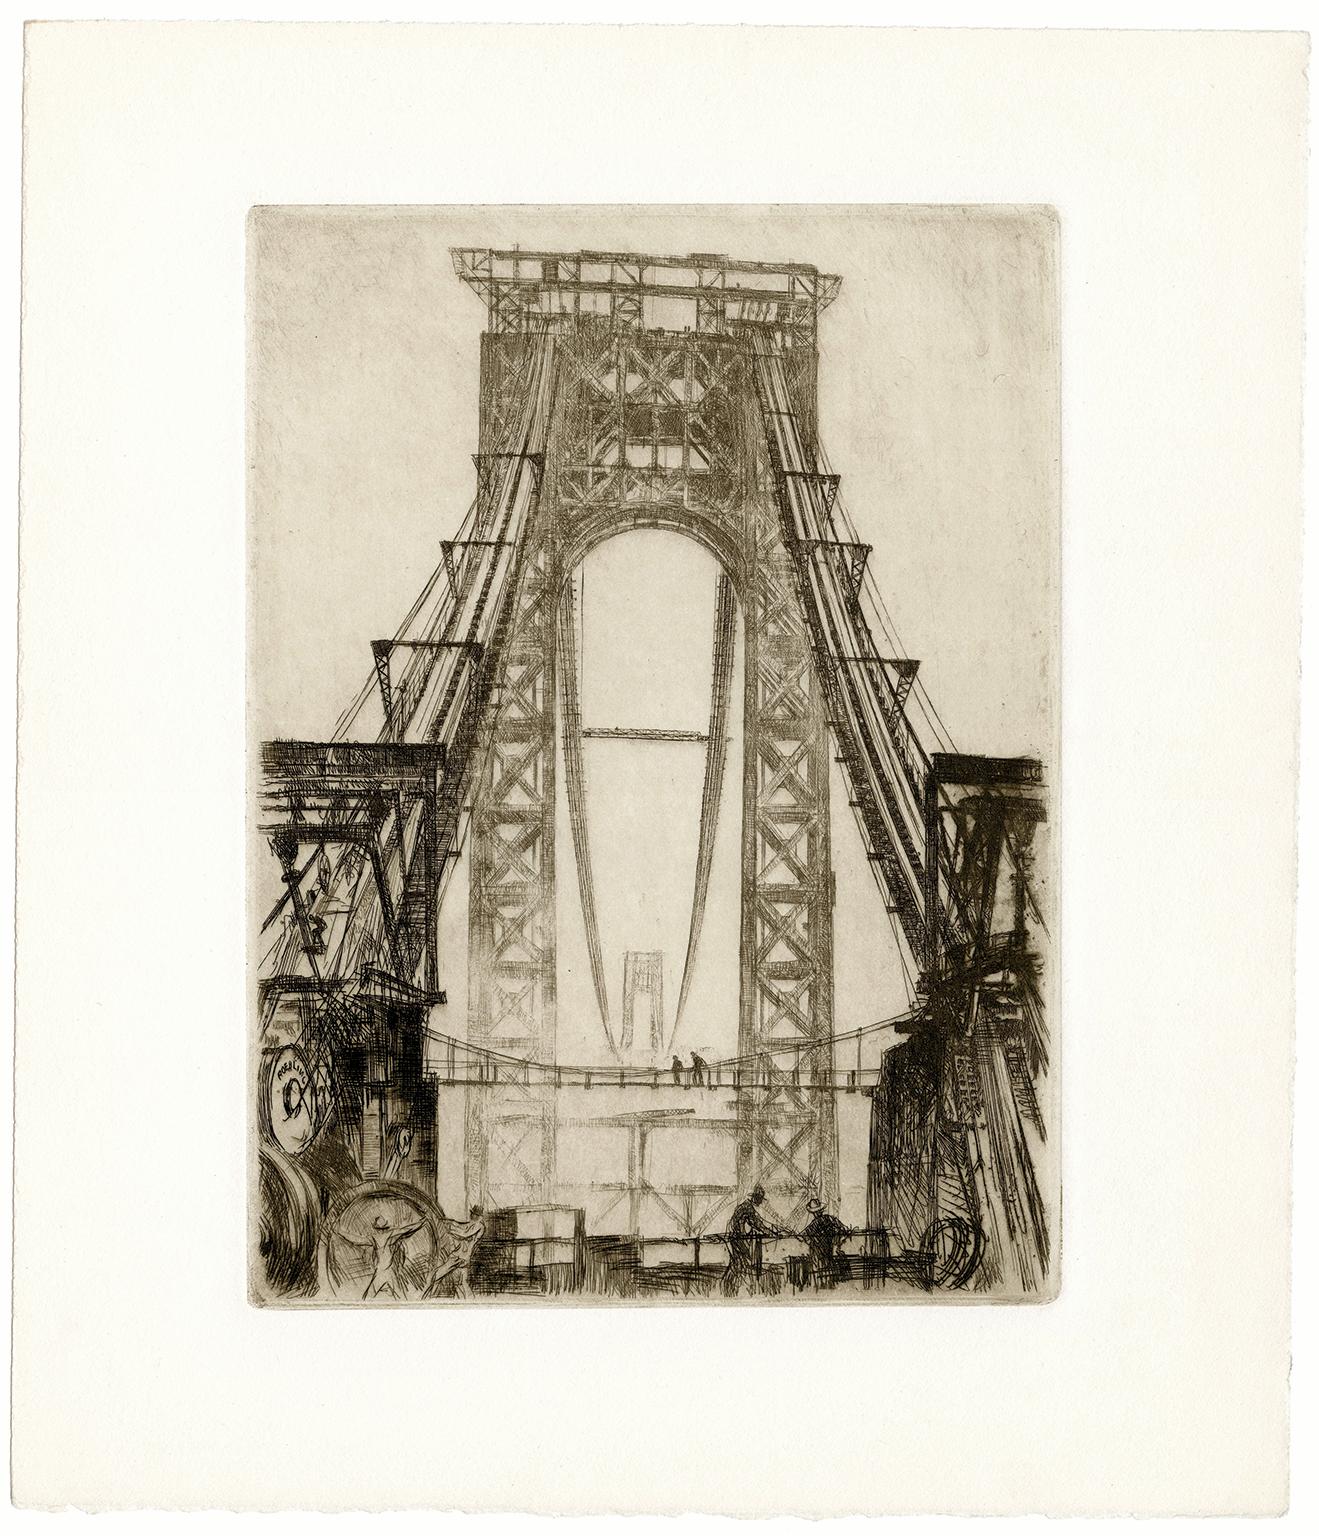 'George Washington Bridge (Under Construction)' — 1920s New York City - Print by Otto Kuhler